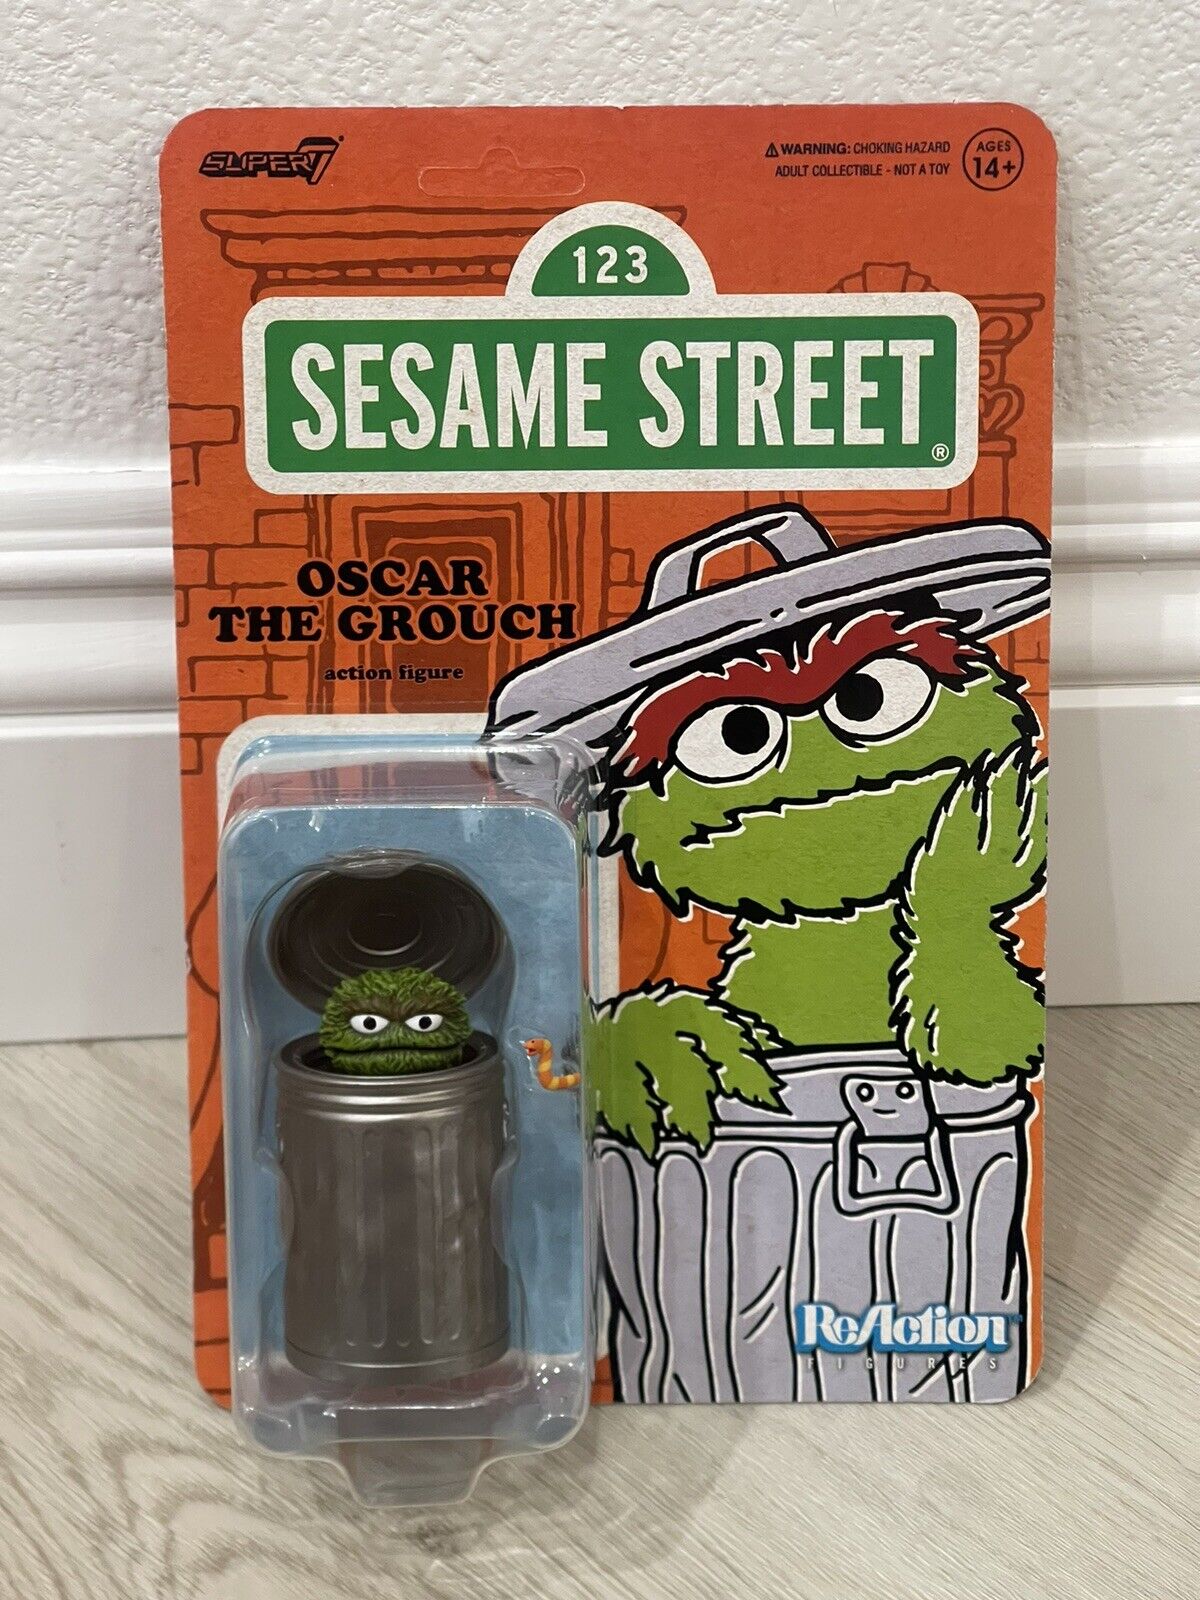 Oscar The Grouch Sesame Street 1,2,3 Super 7 Reaction Action Figure